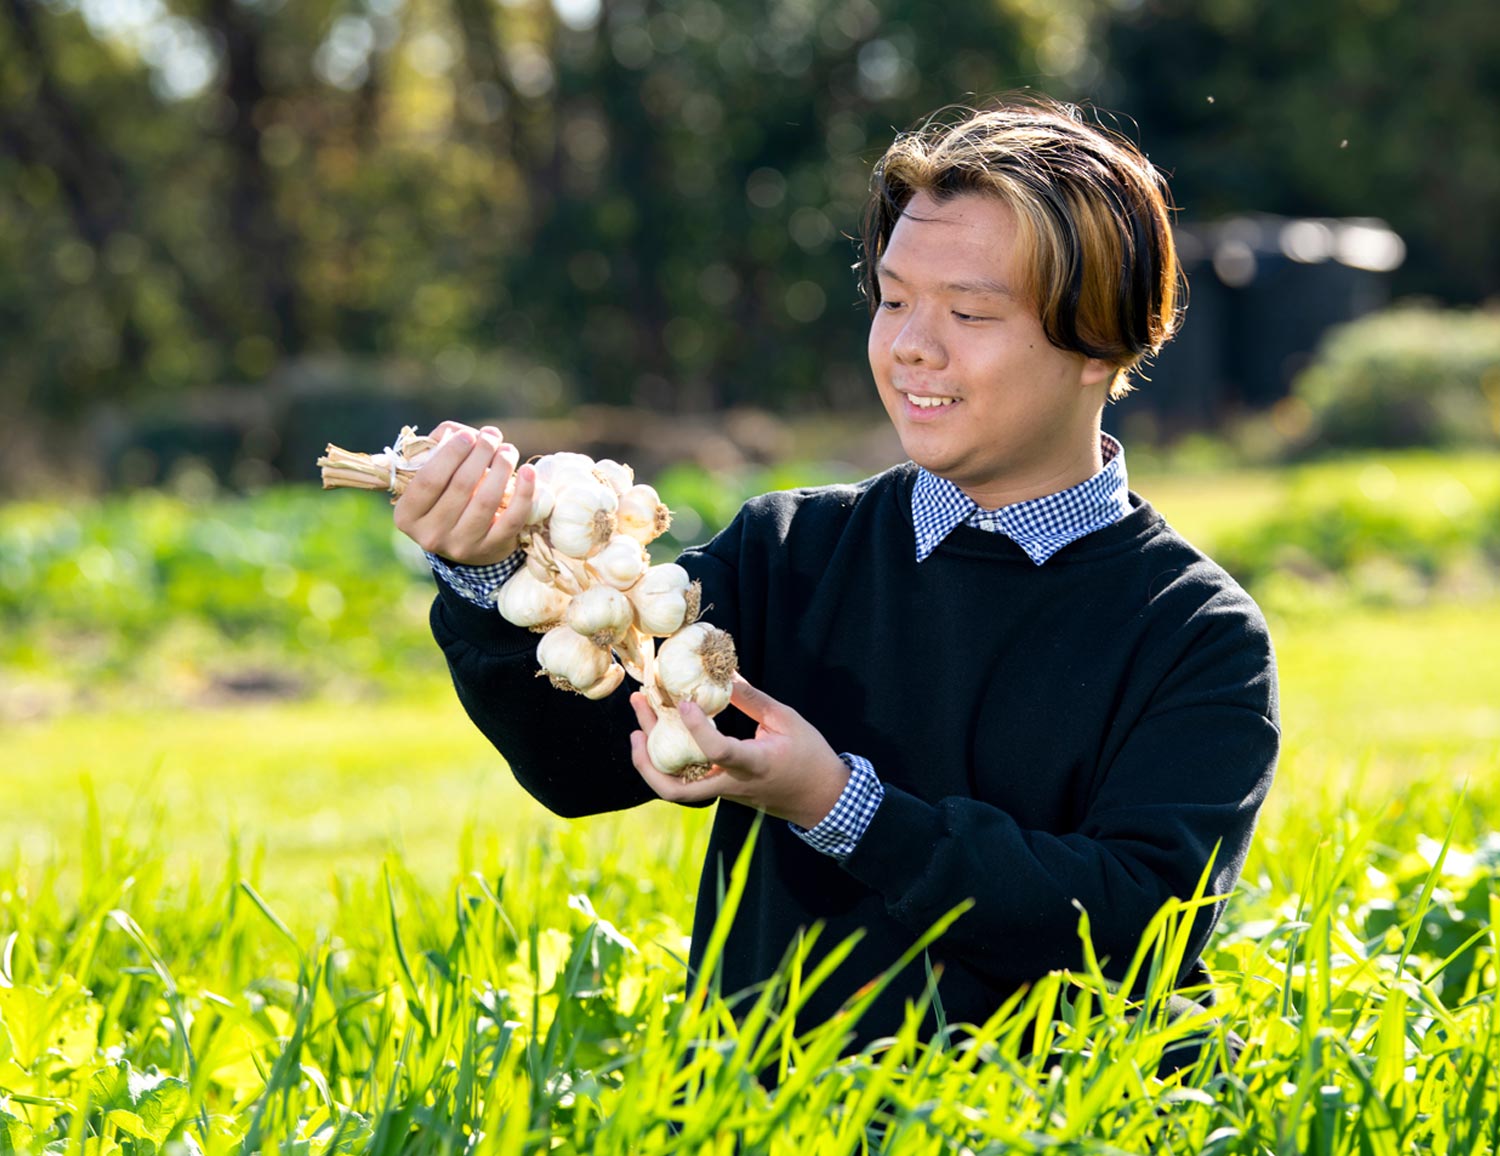 student Sam Pring examines a bushel of garlic bulbs in a field